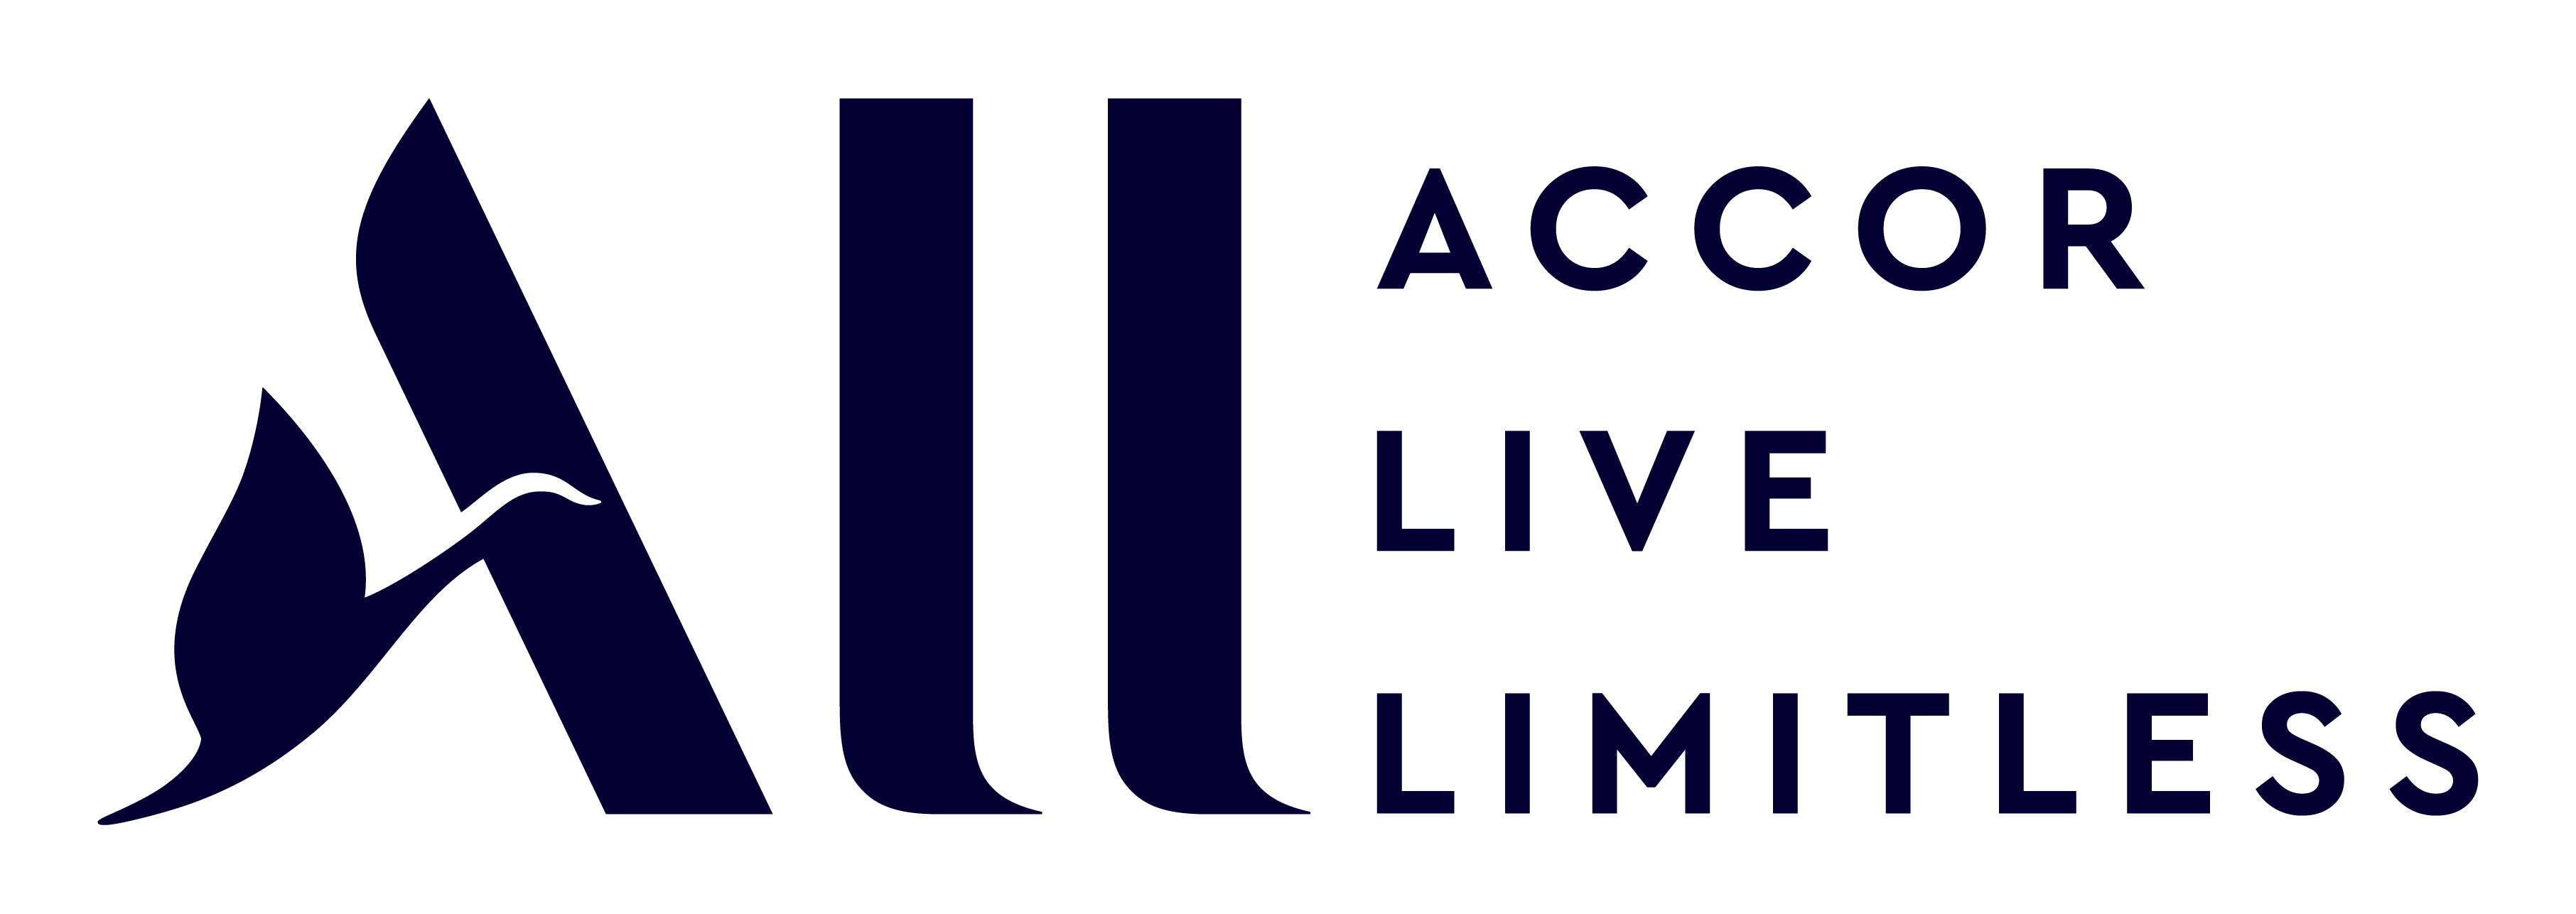 Accor Live Limitless